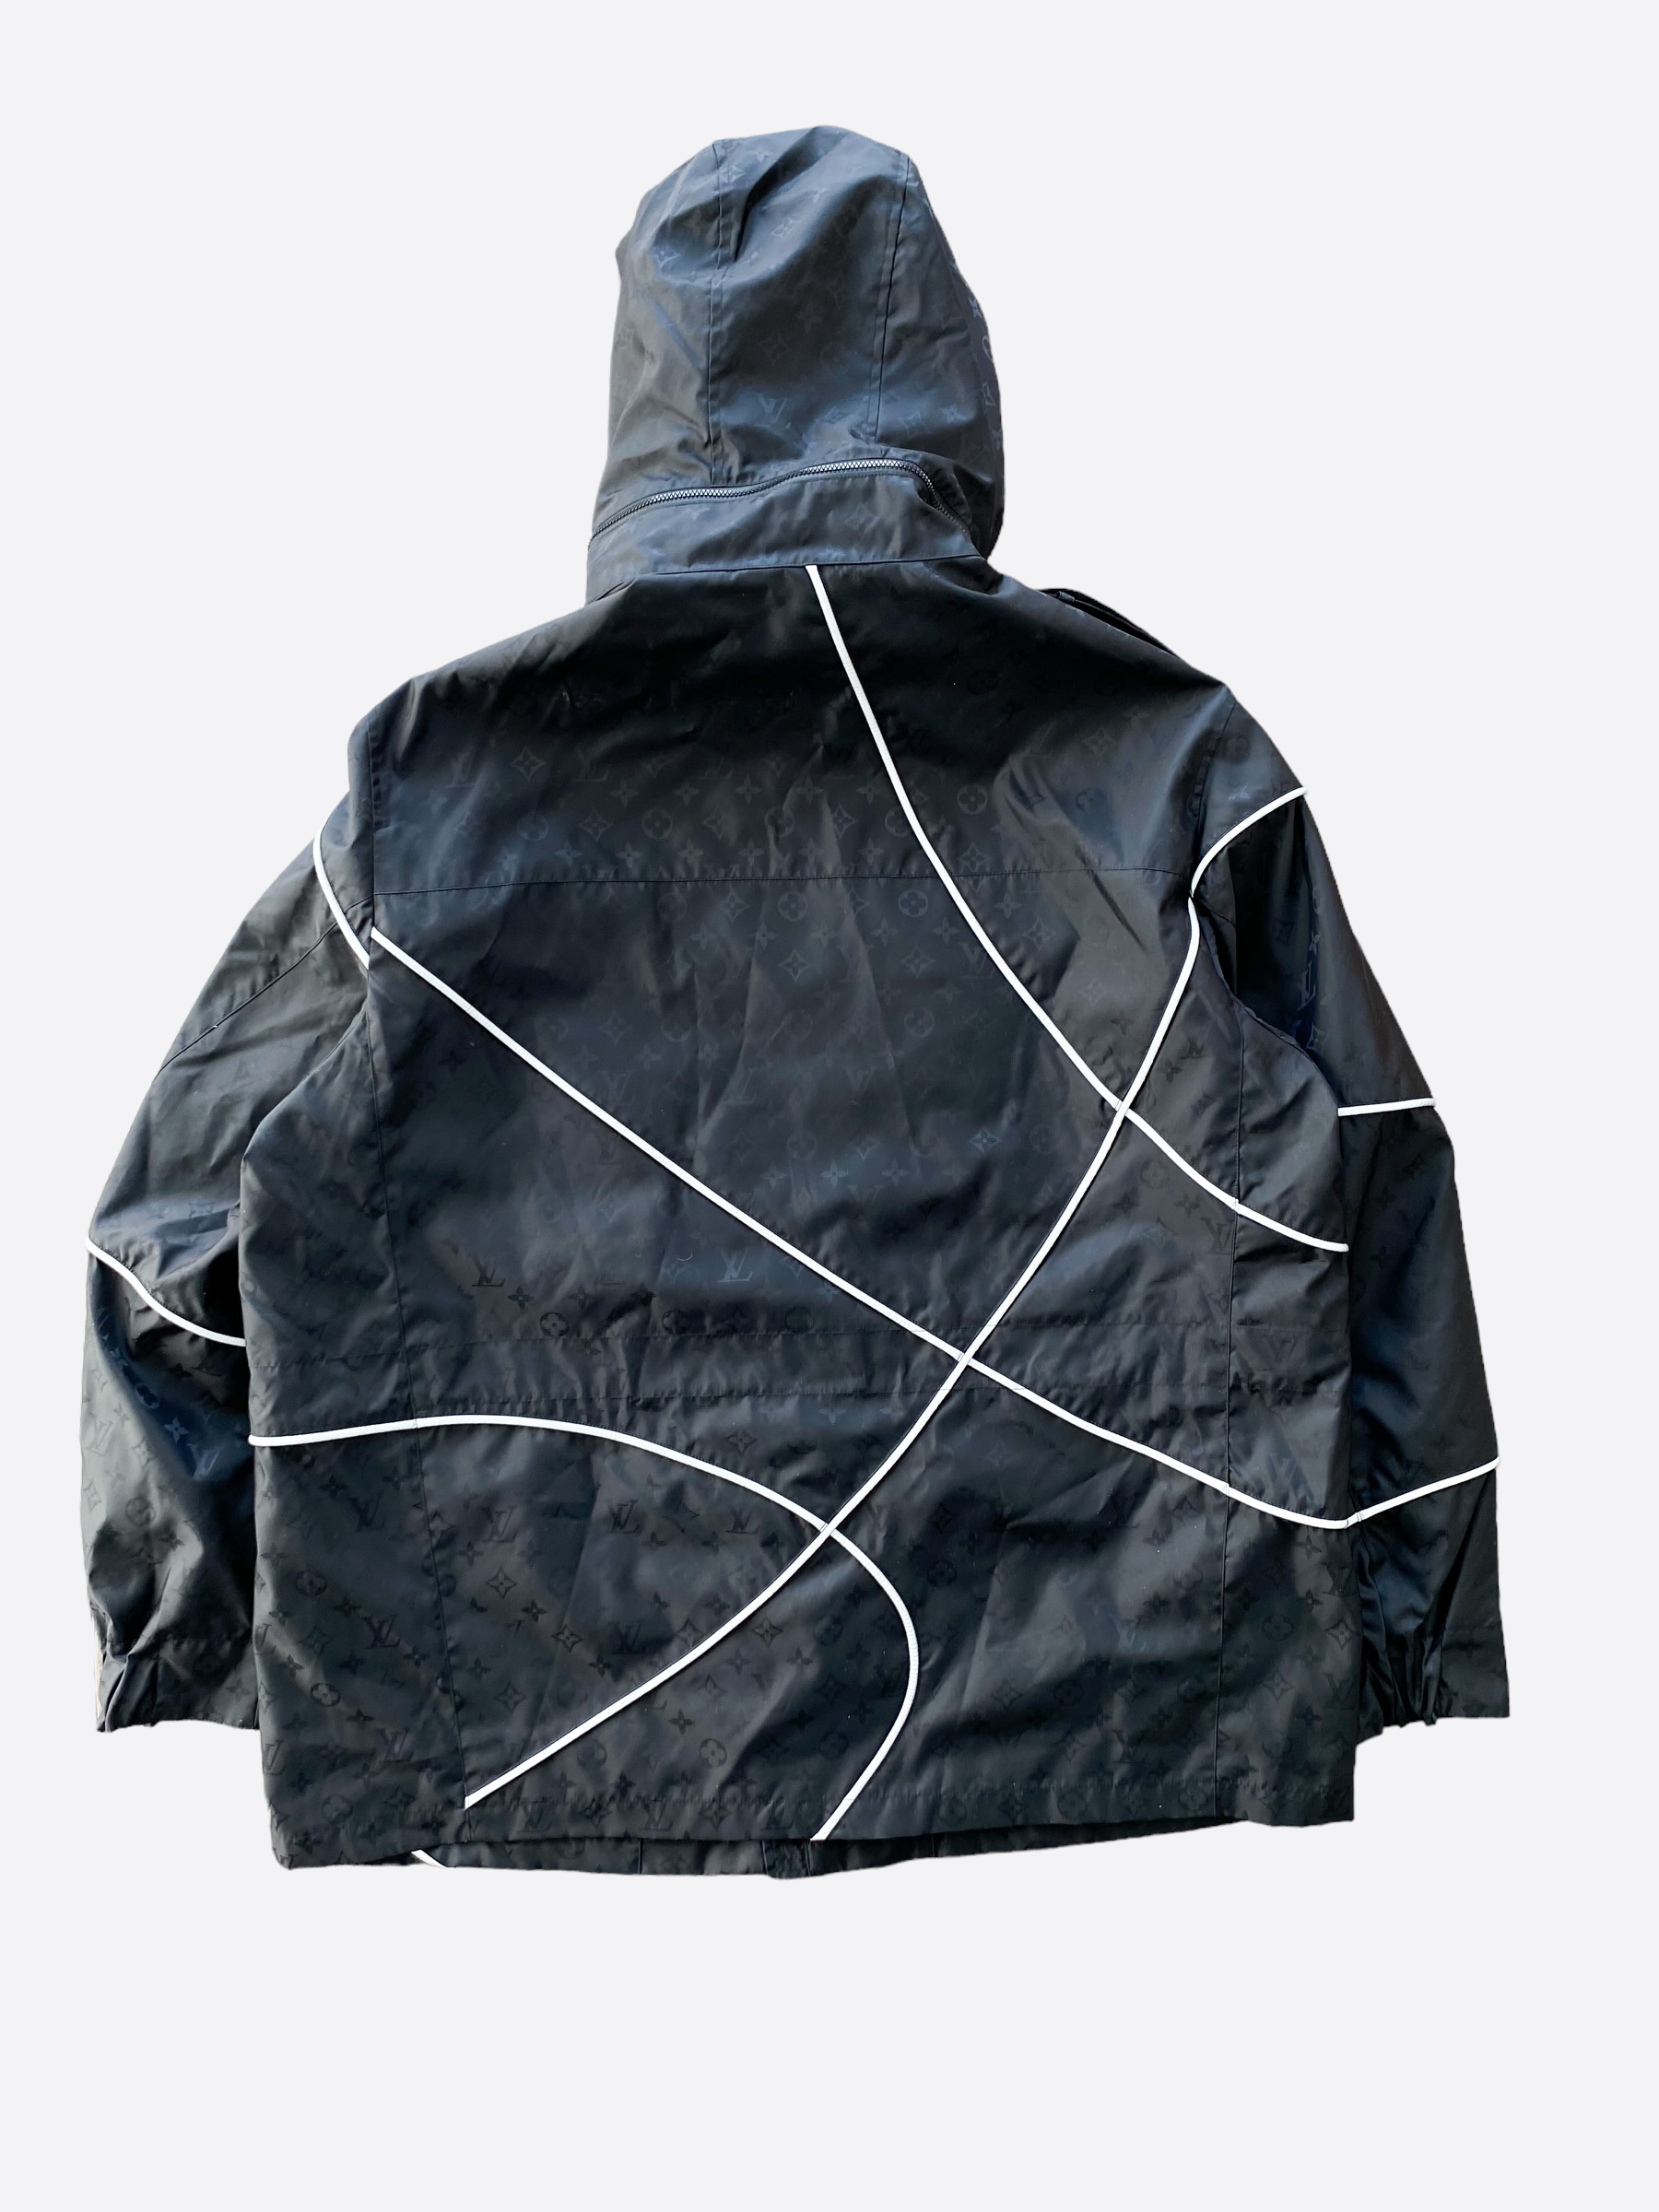 LVxNBA Knit Jacket - Ready to Wear